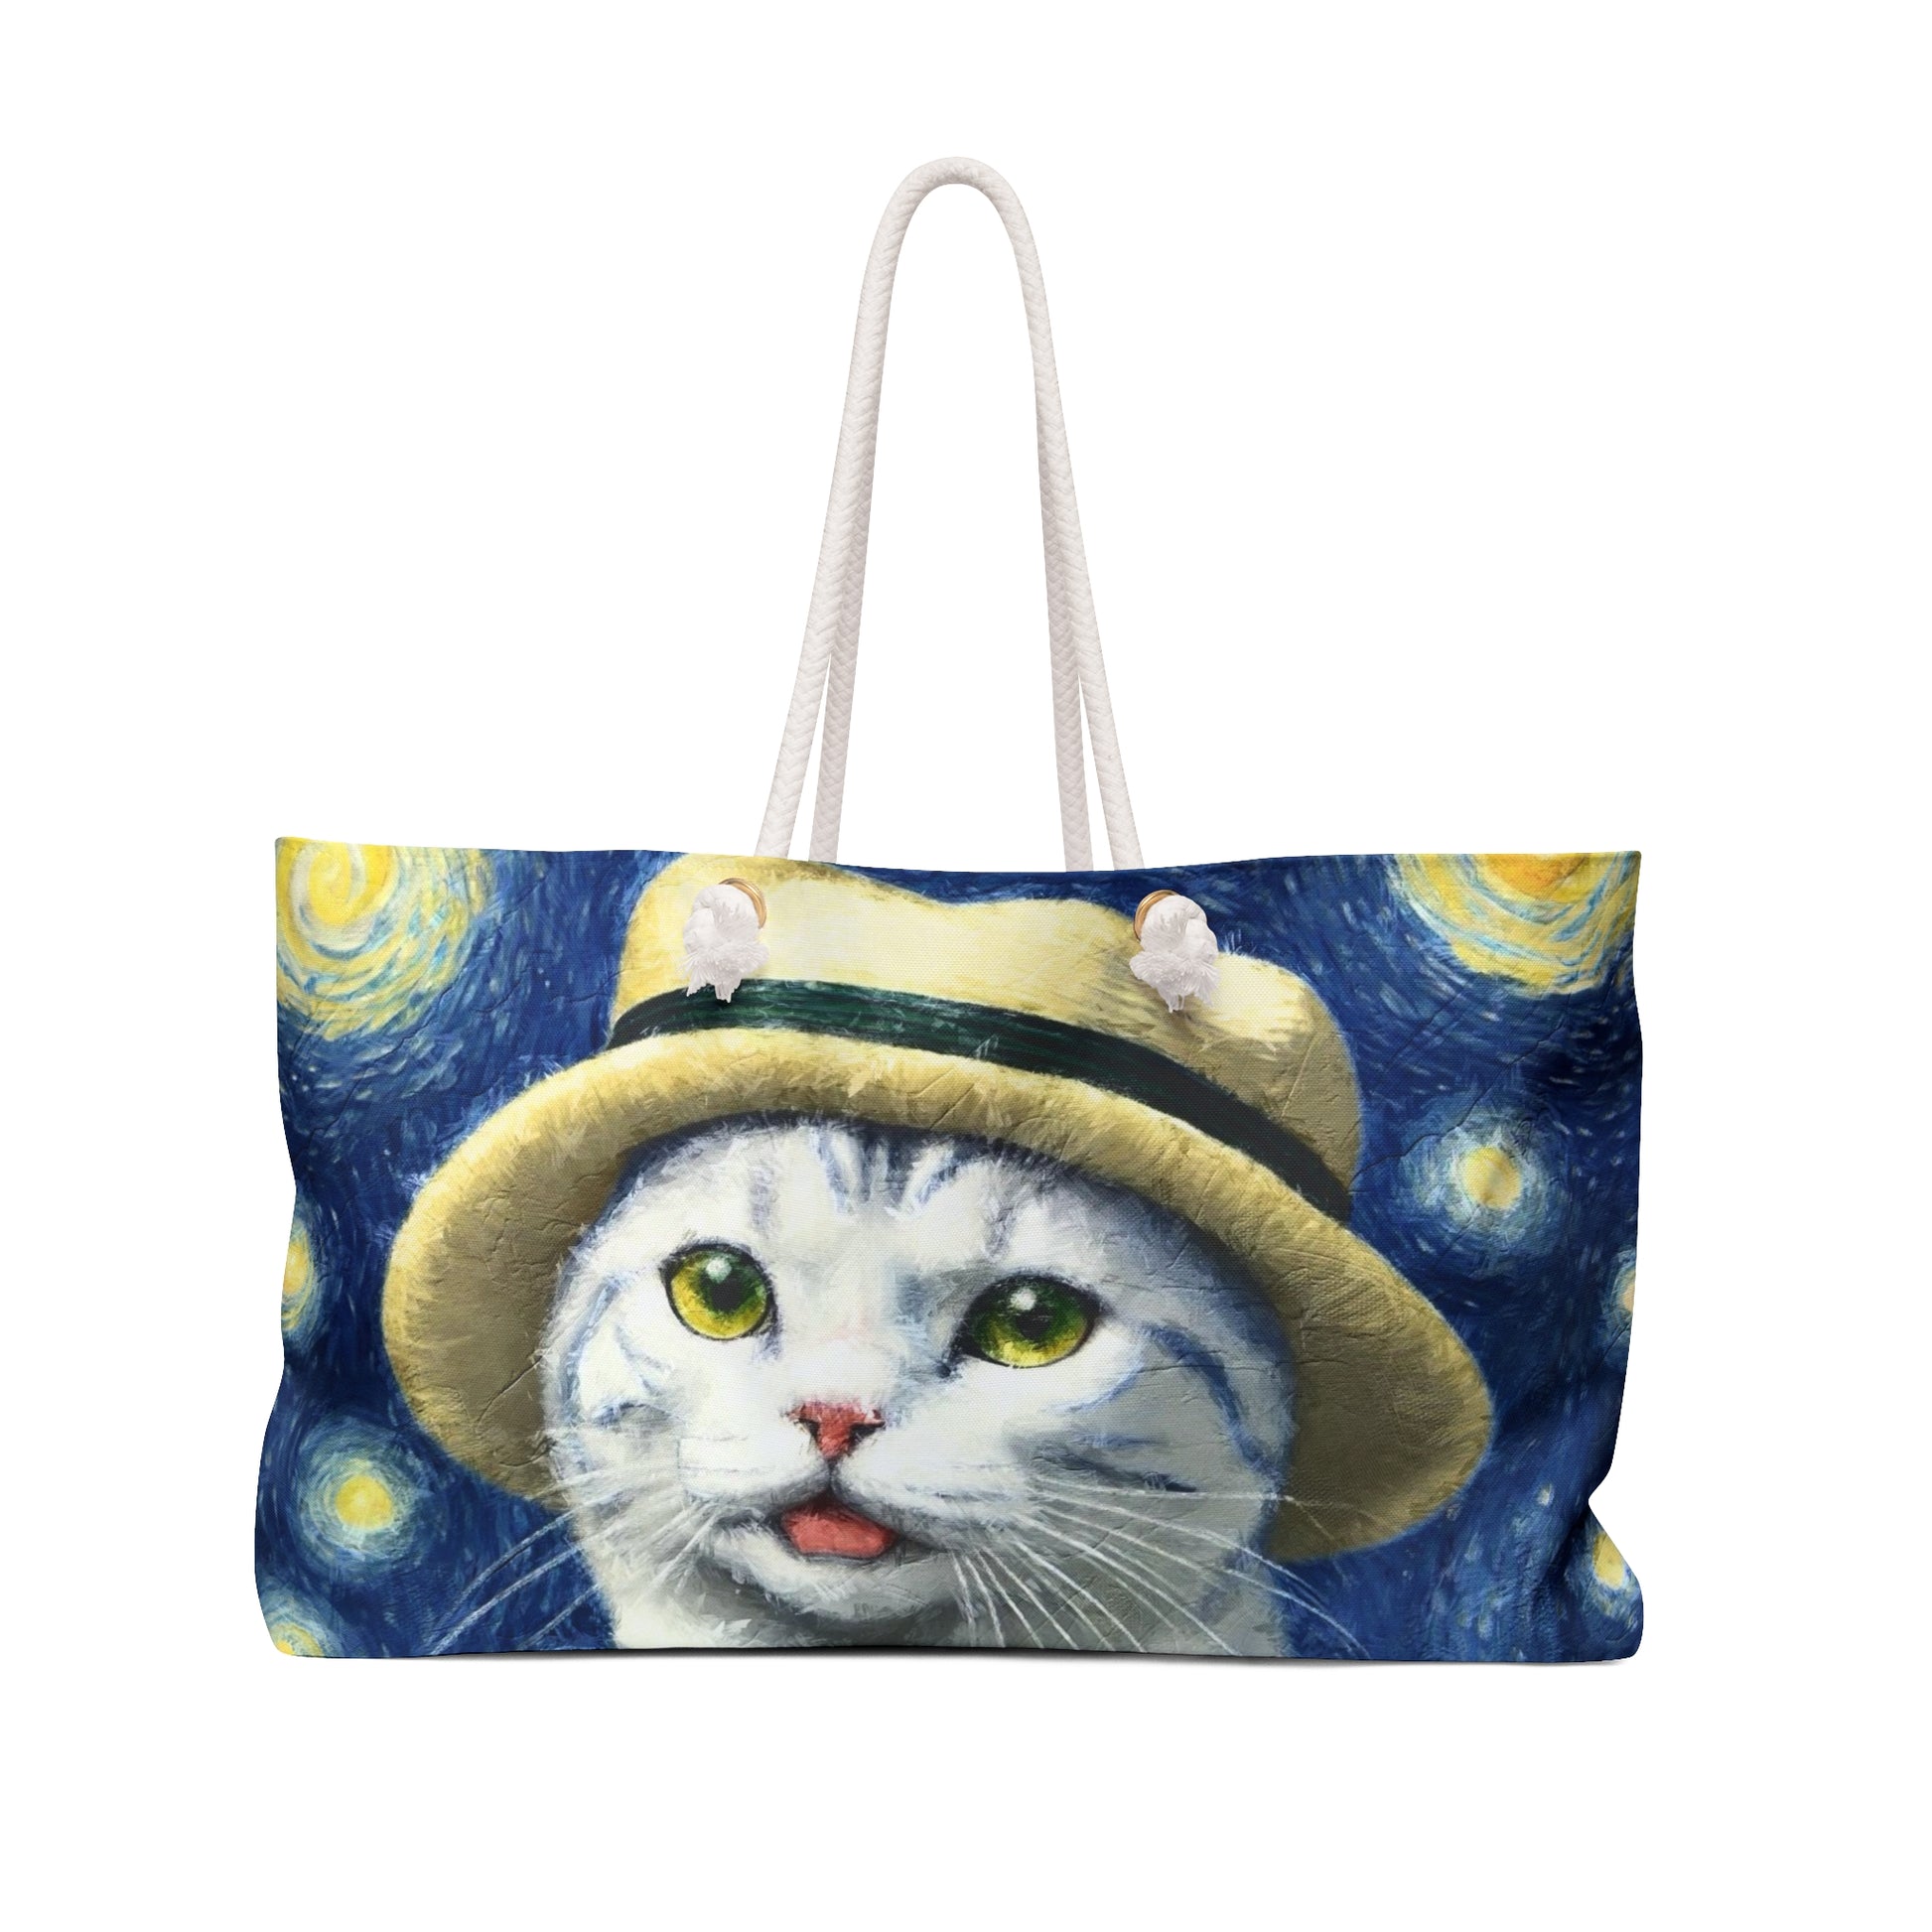 Weekender Tote Bag - Starry Eyed Kitten front